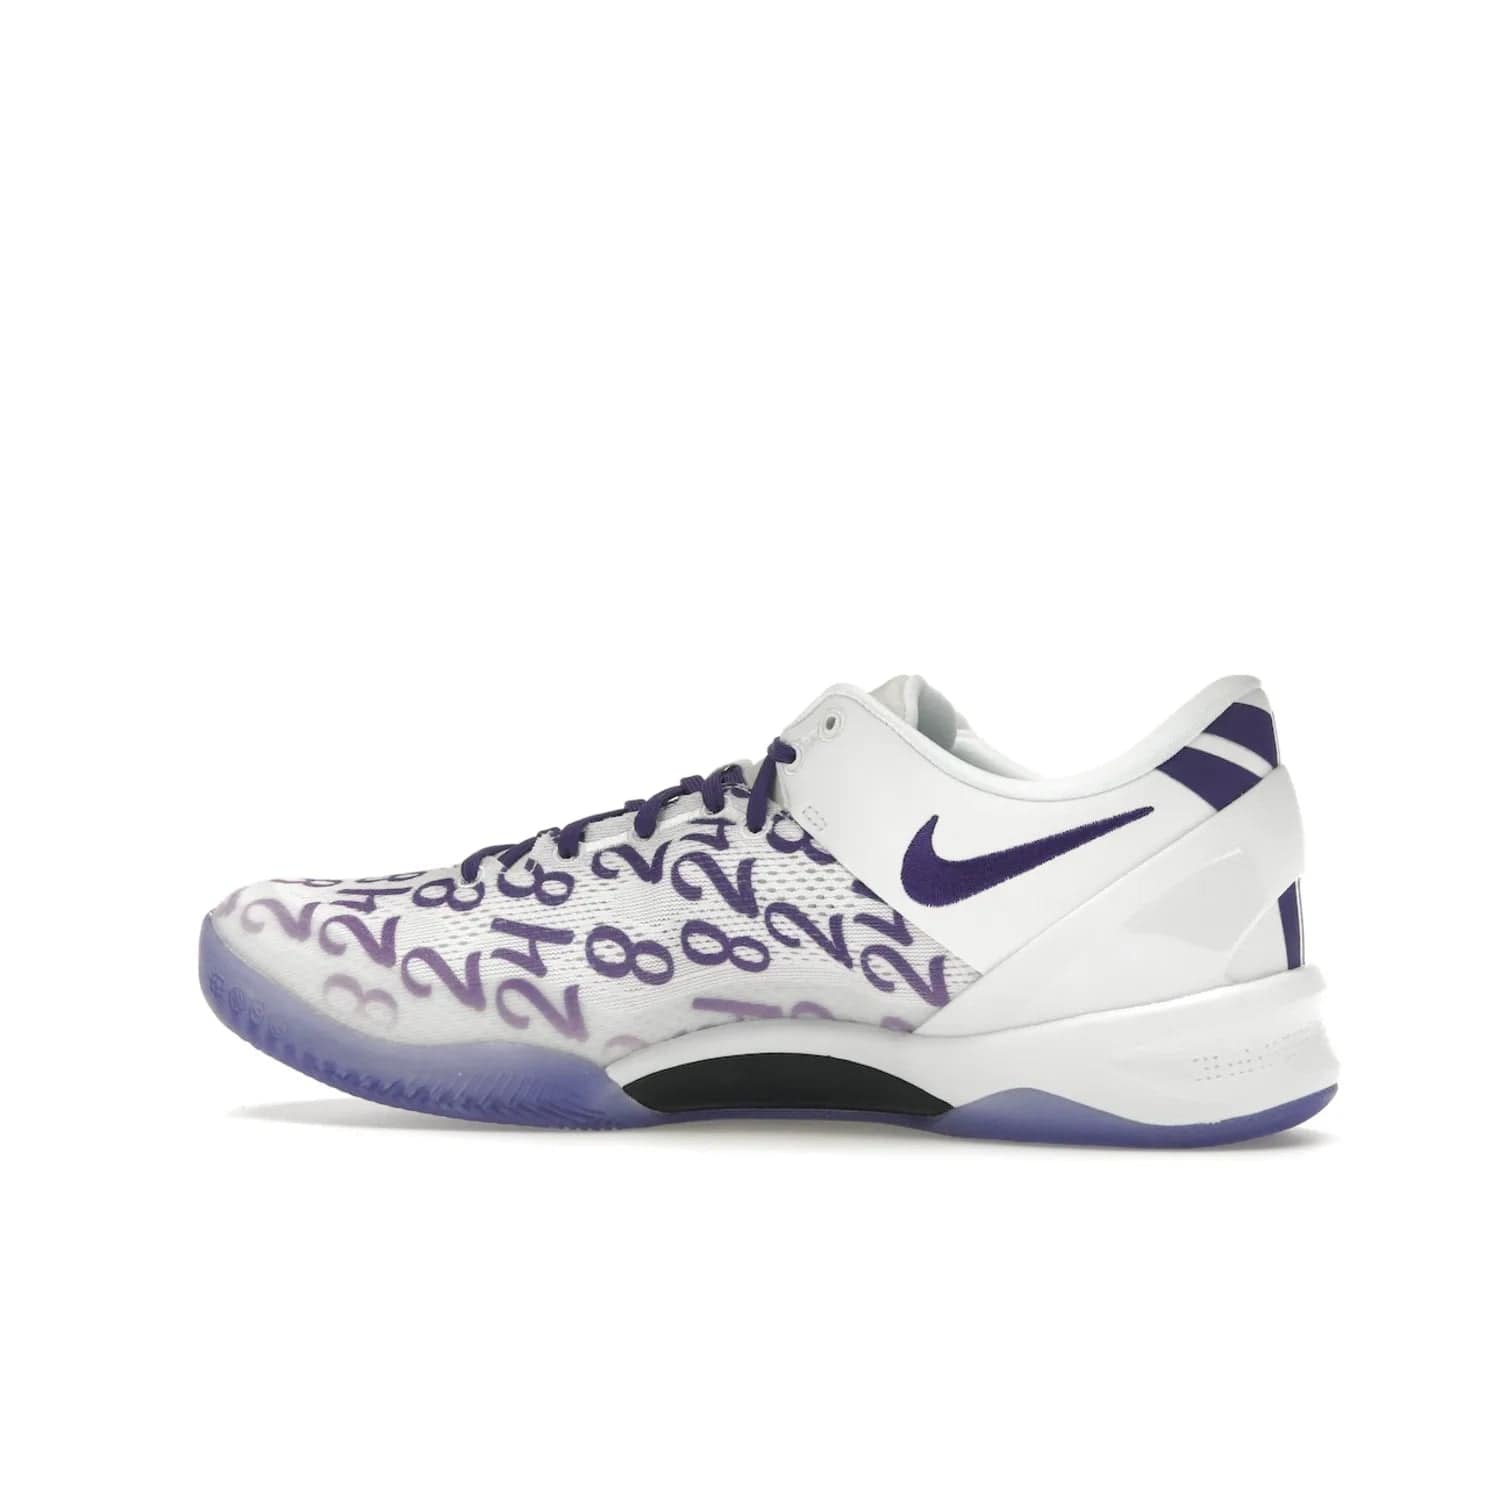 Nike Kobe 8 Protro Court Purple - Image 21 - Only at www.BallersClubKickz.com - 